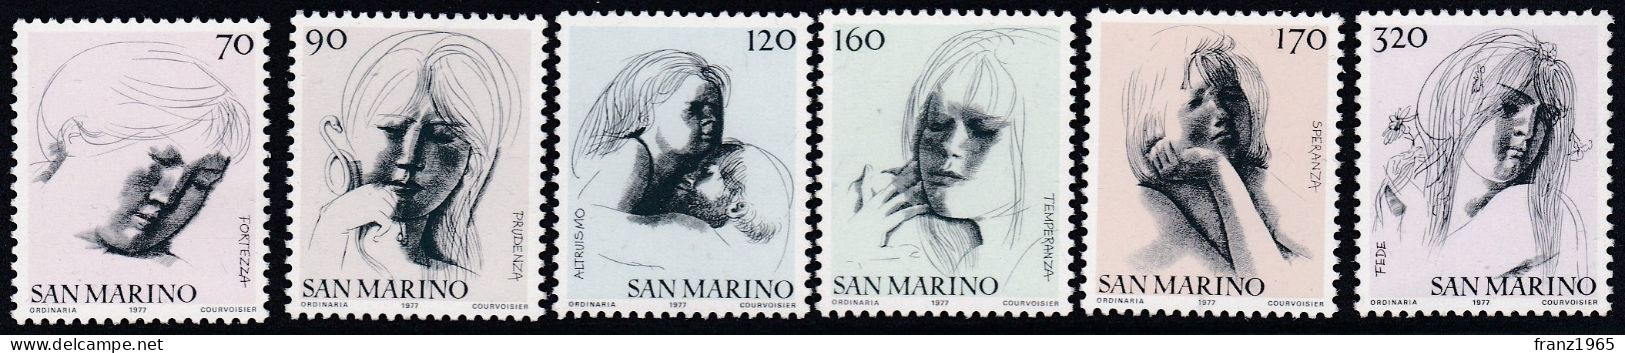 Virtues Of People - 1977 - Unused Stamps